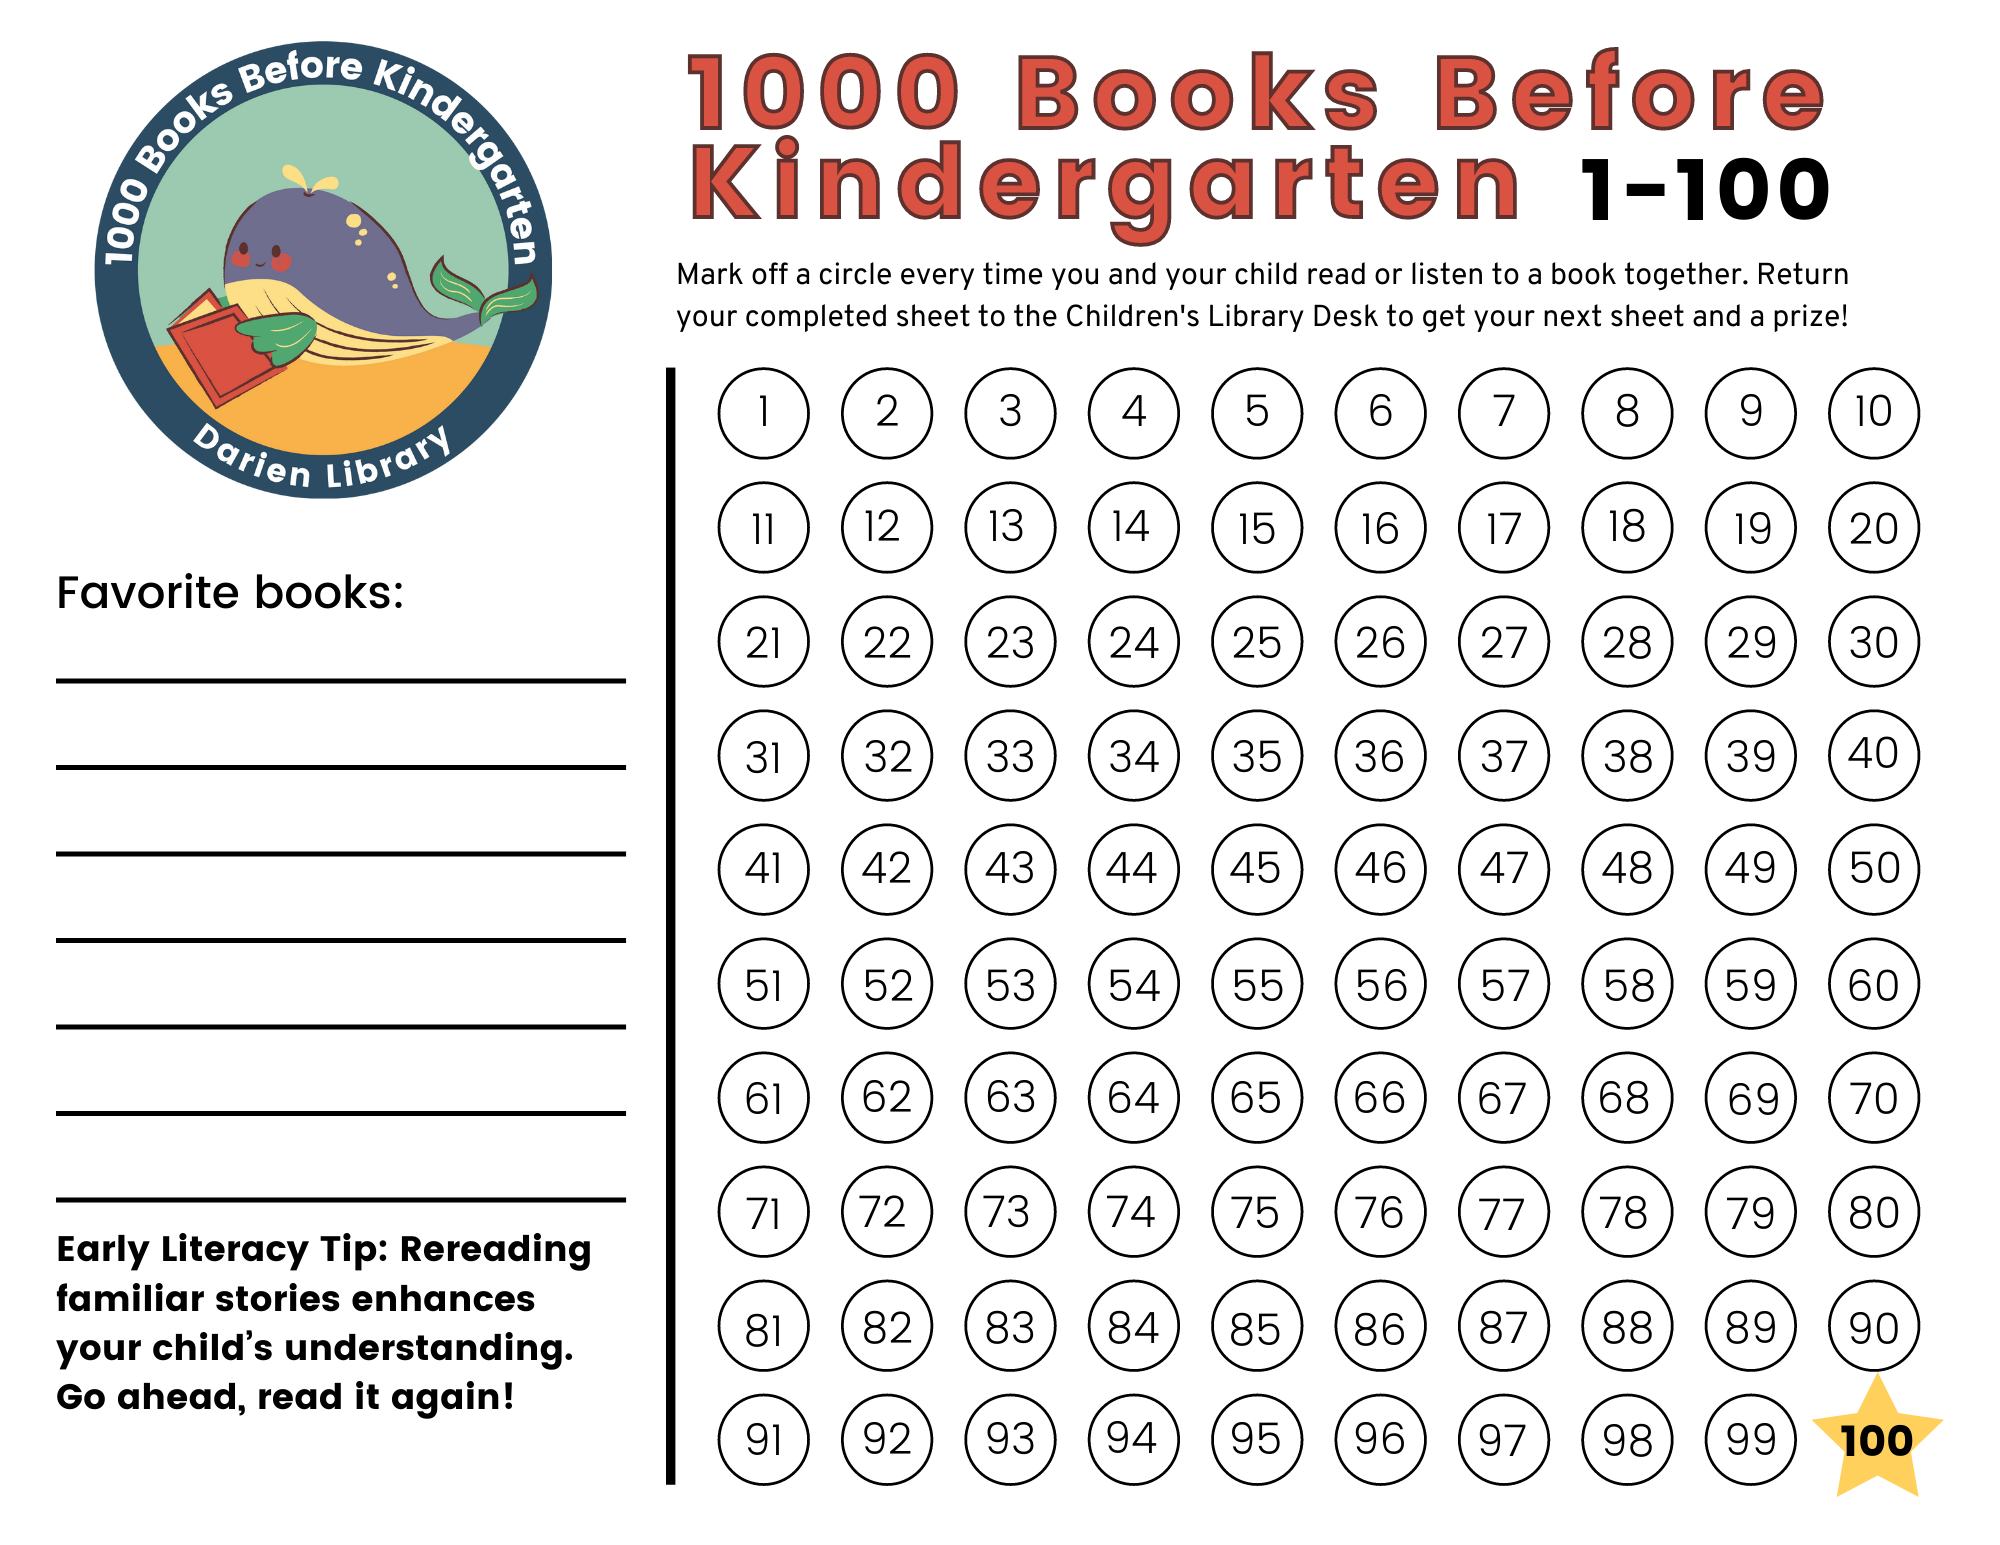 1000 Books Before Kindergarten log sheet